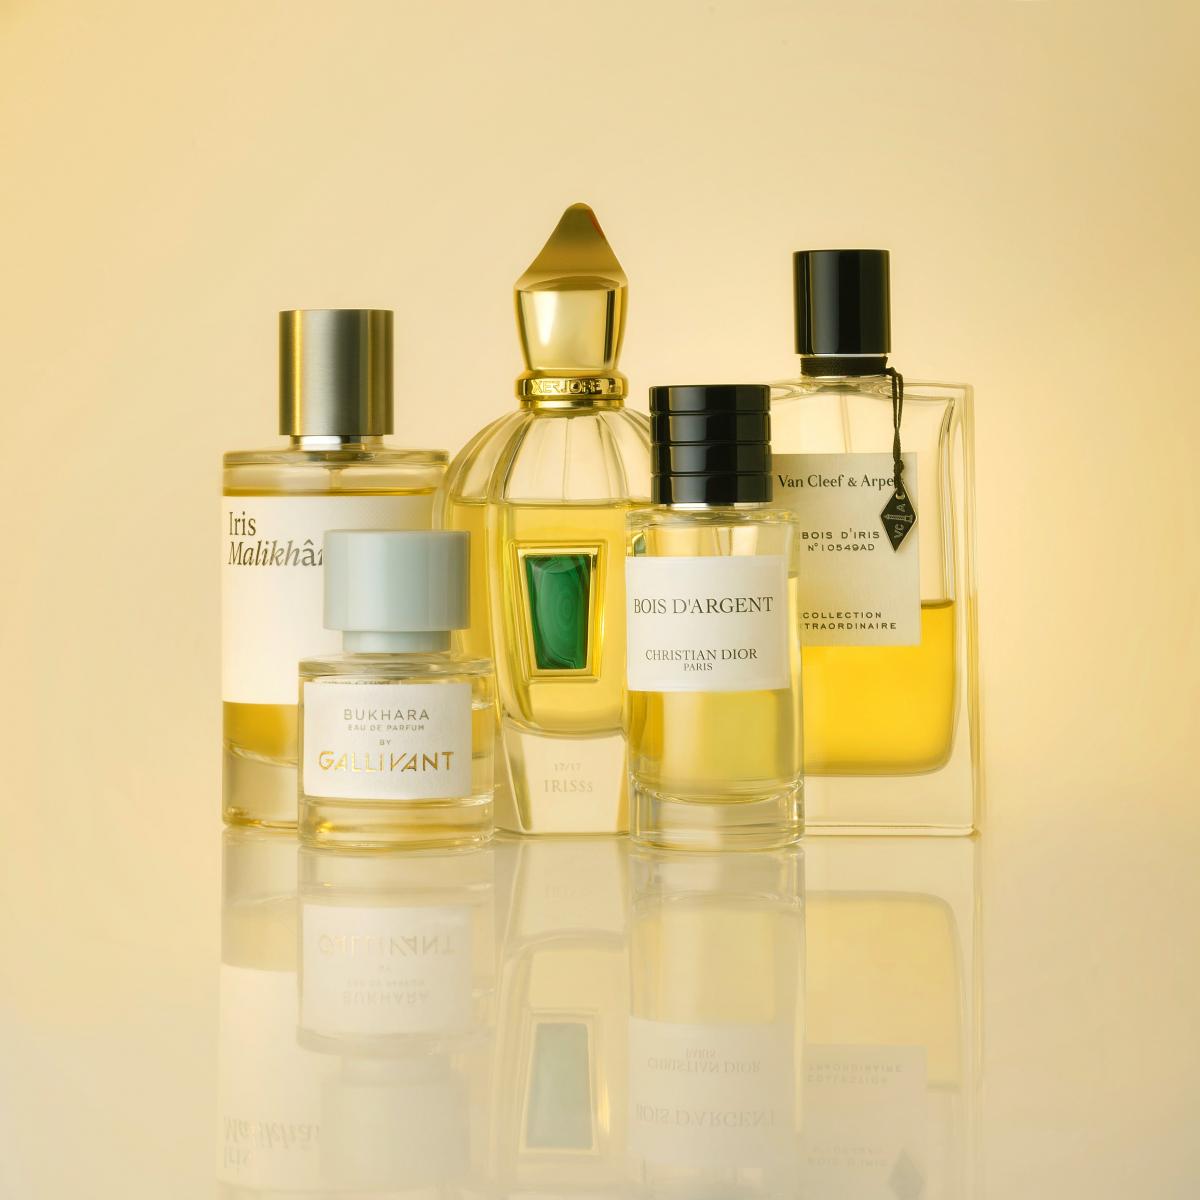 Irisss Xerjoff perfume - a fragrance for women 2008